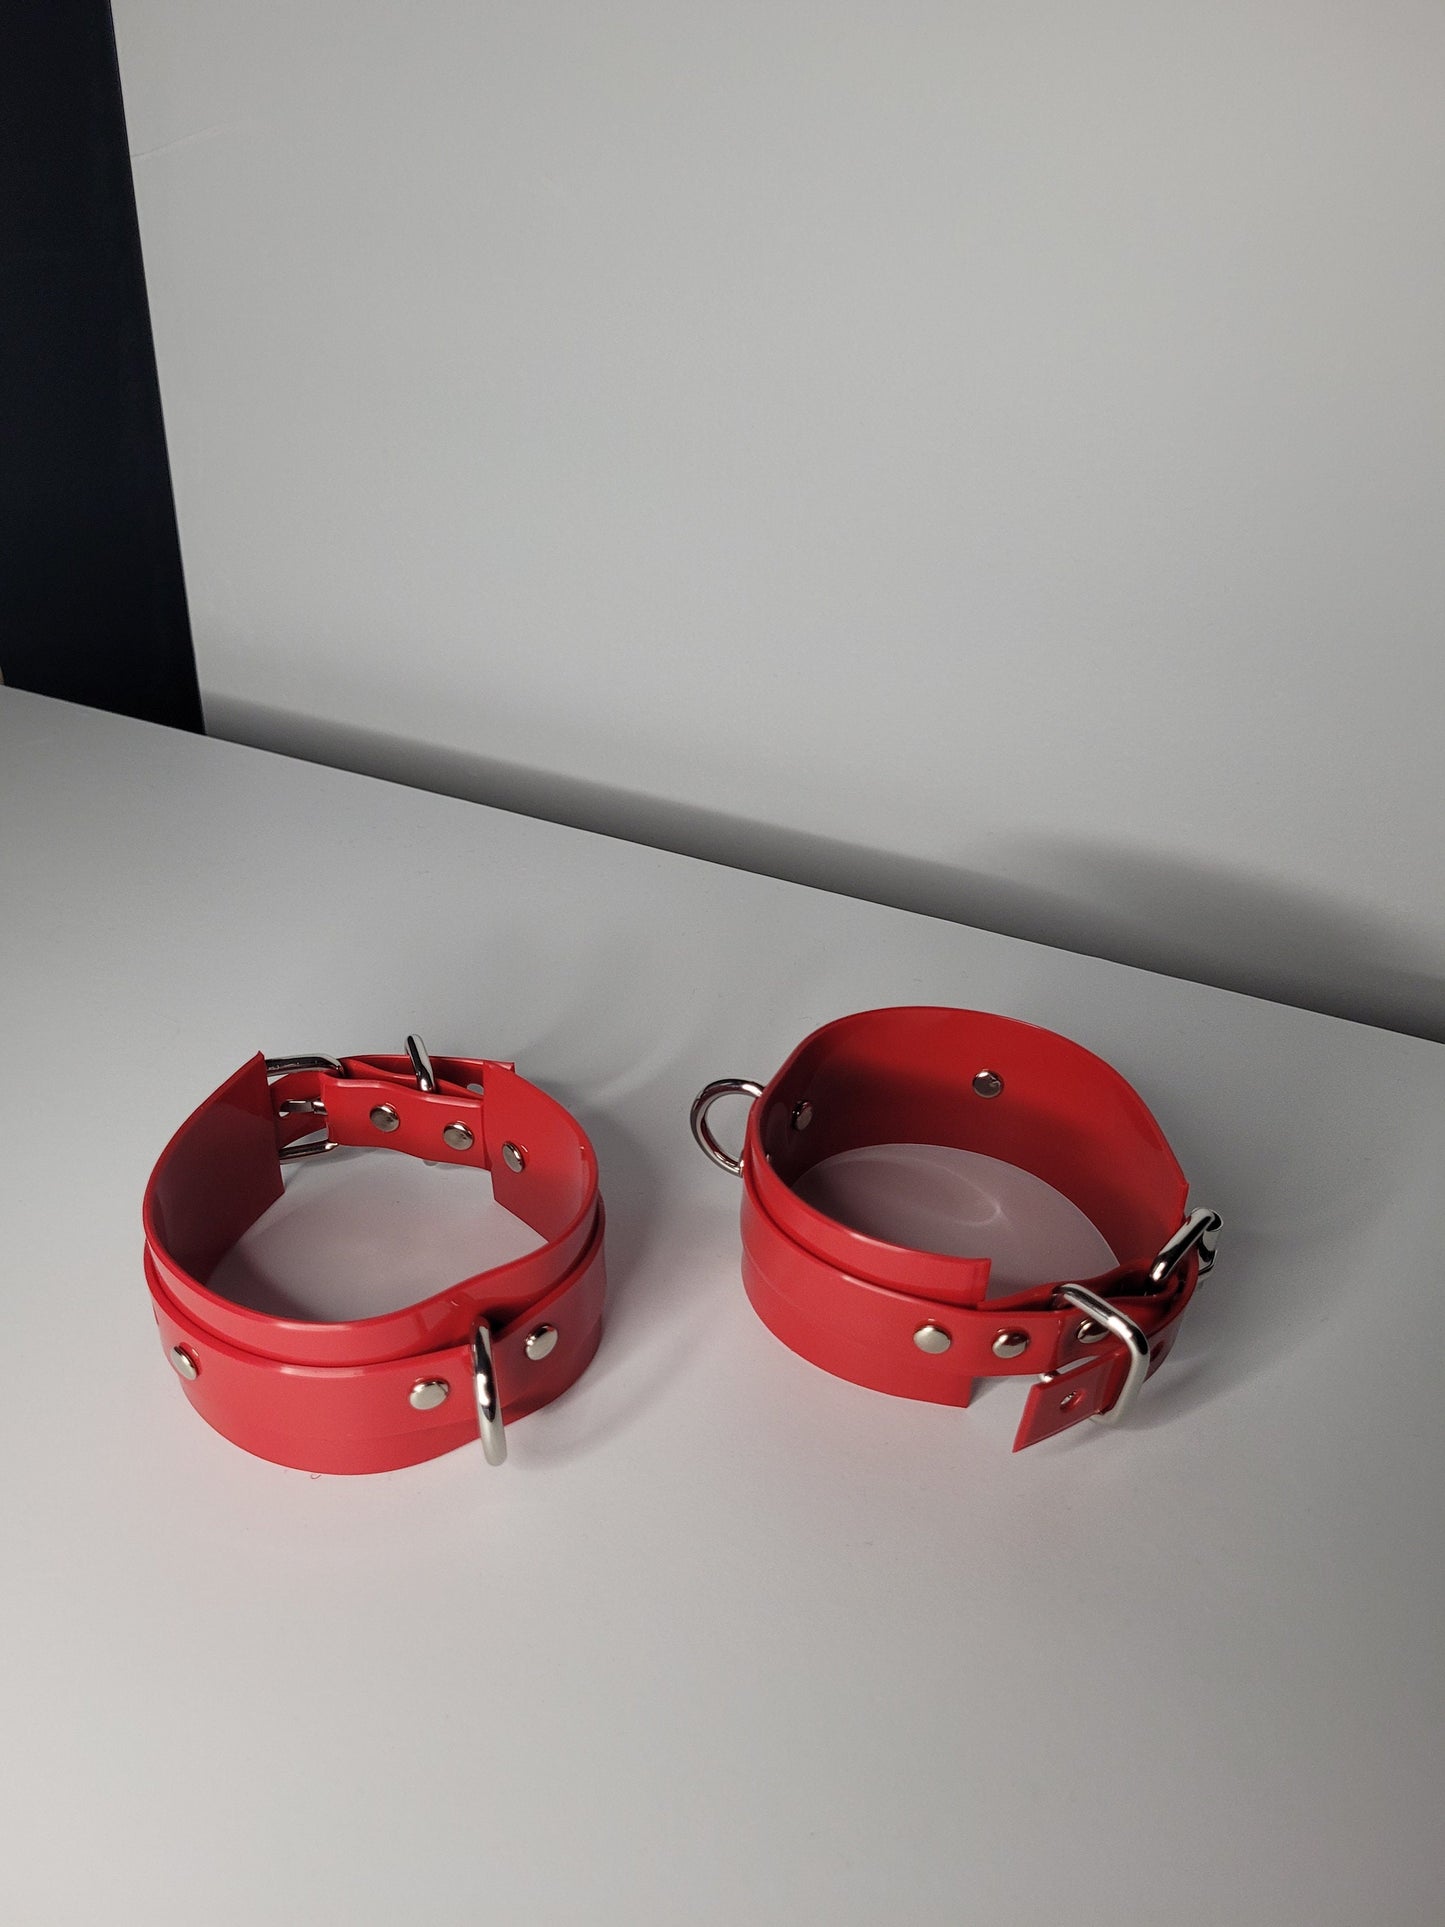 Red PVC bondage cuff set x2 hand or feet